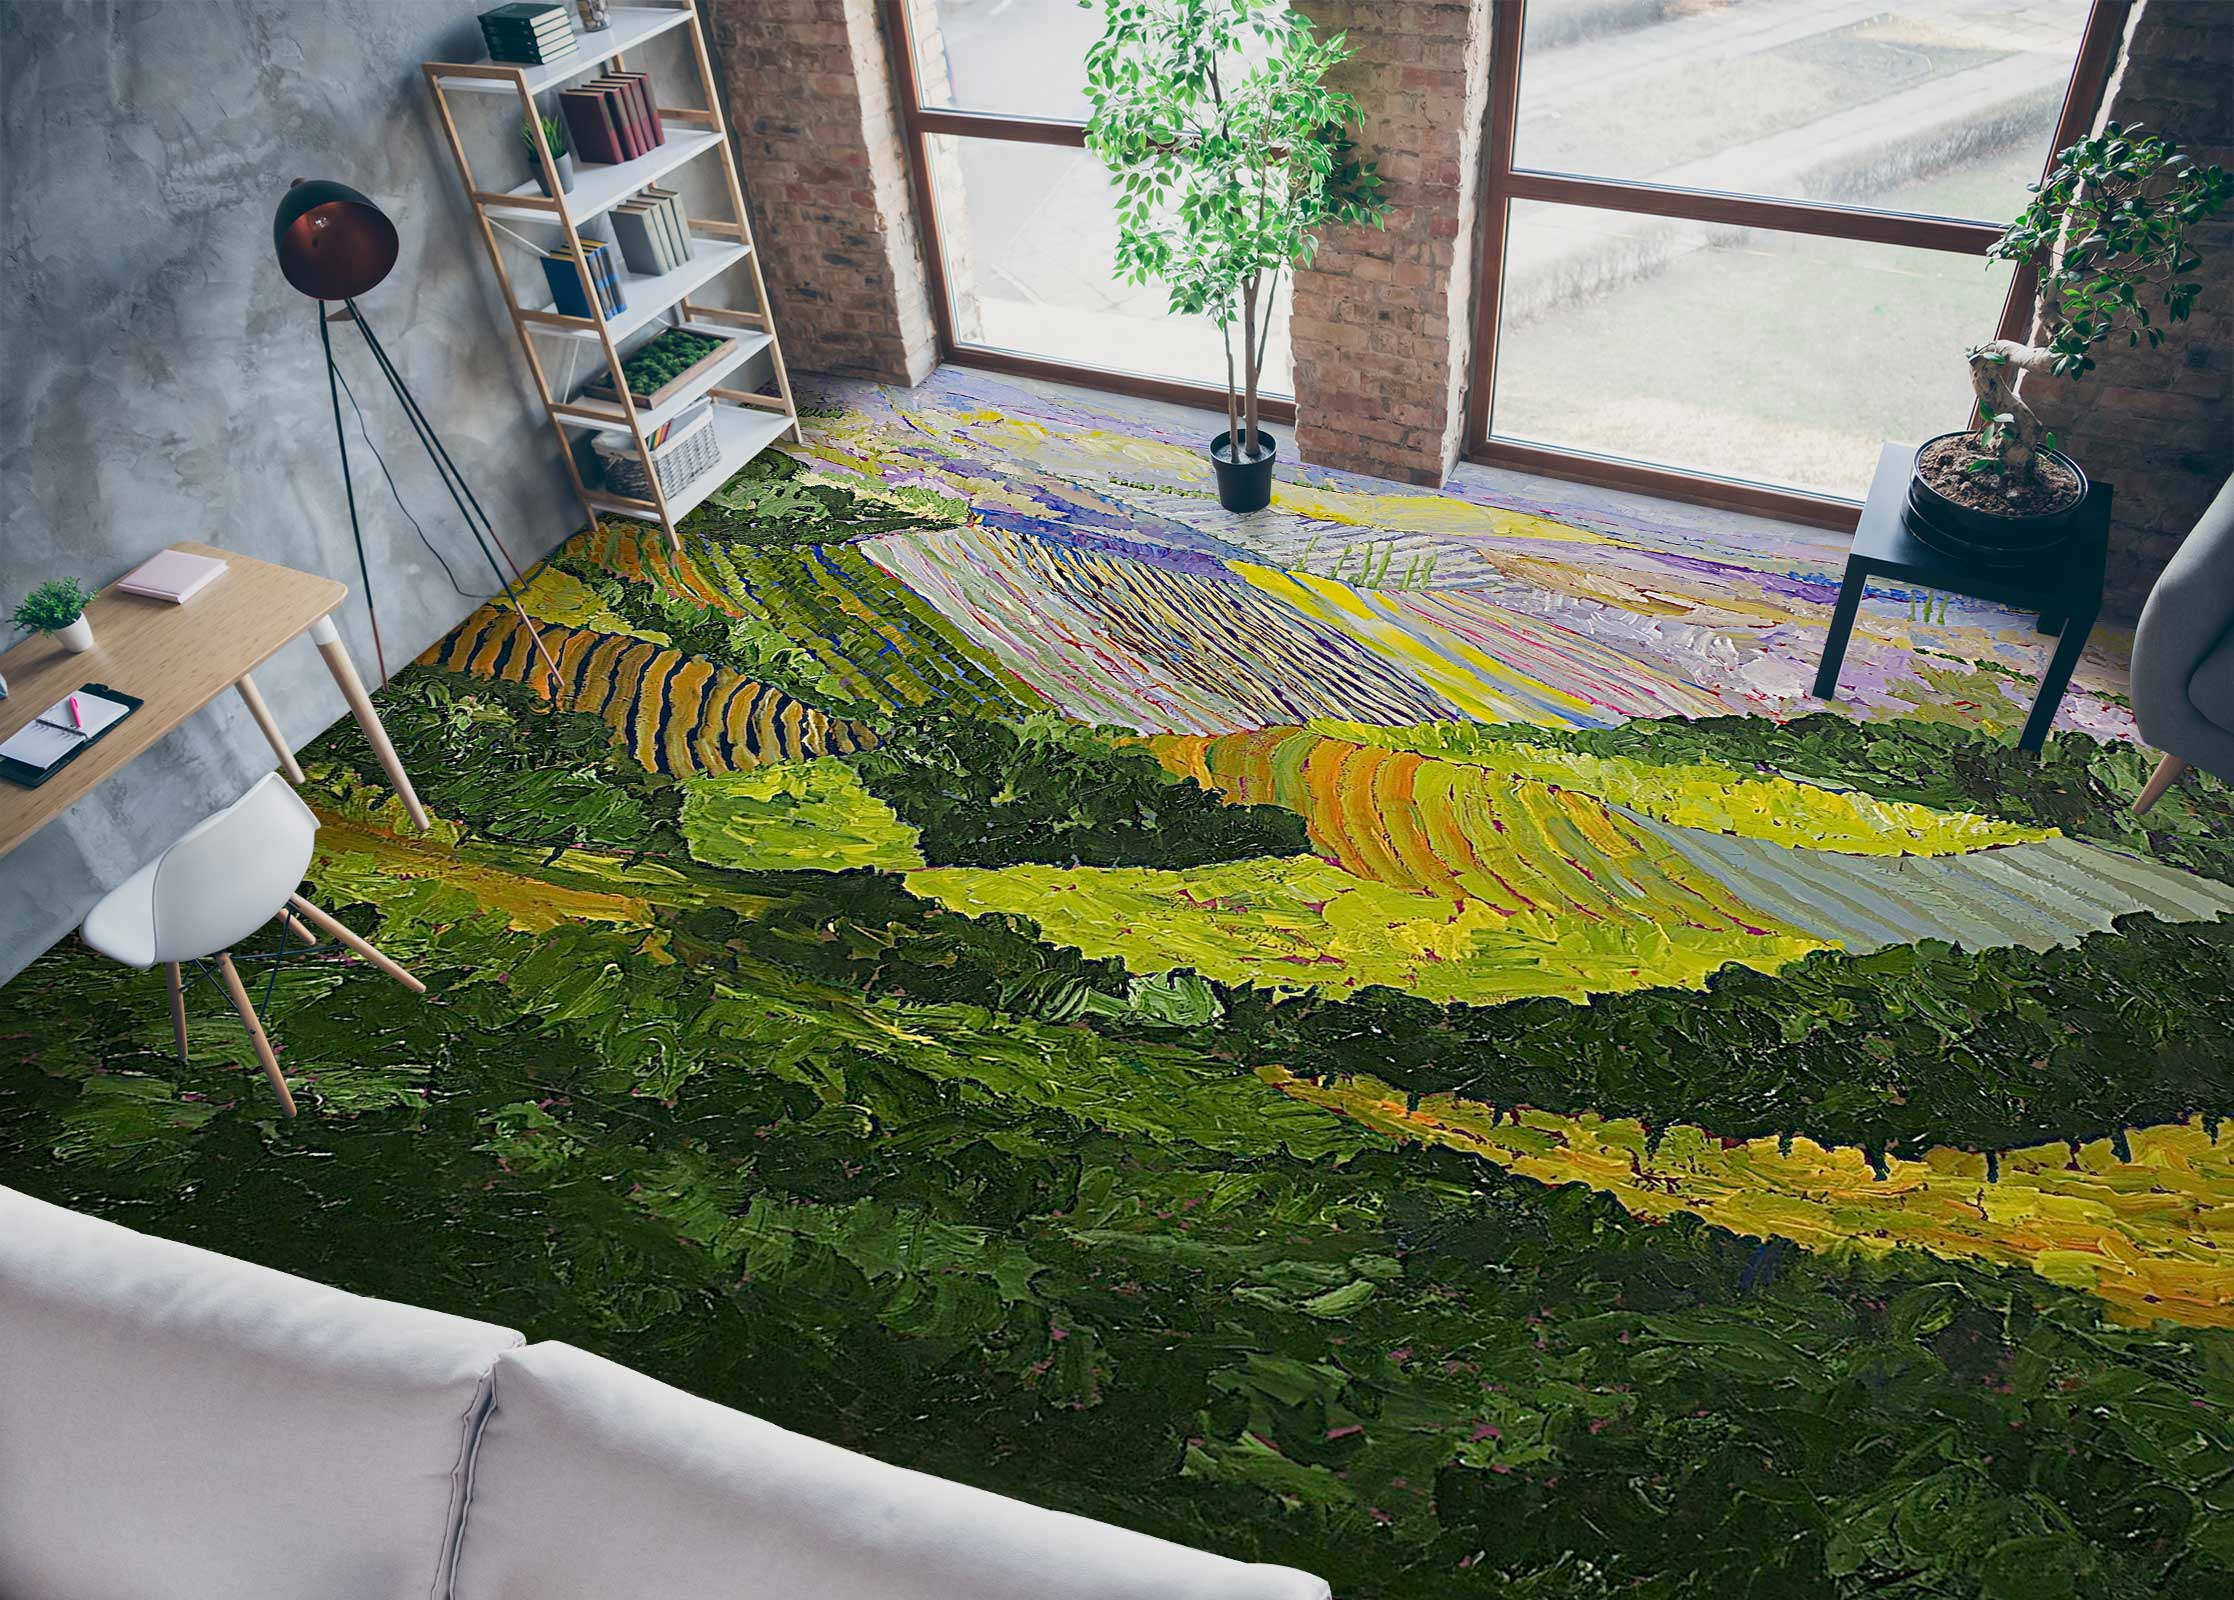 3D Field Grass Painting 9509 Allan P. Friedlander Floor Mural  Wallpaper Murals Self-Adhesive Removable Print Epoxy